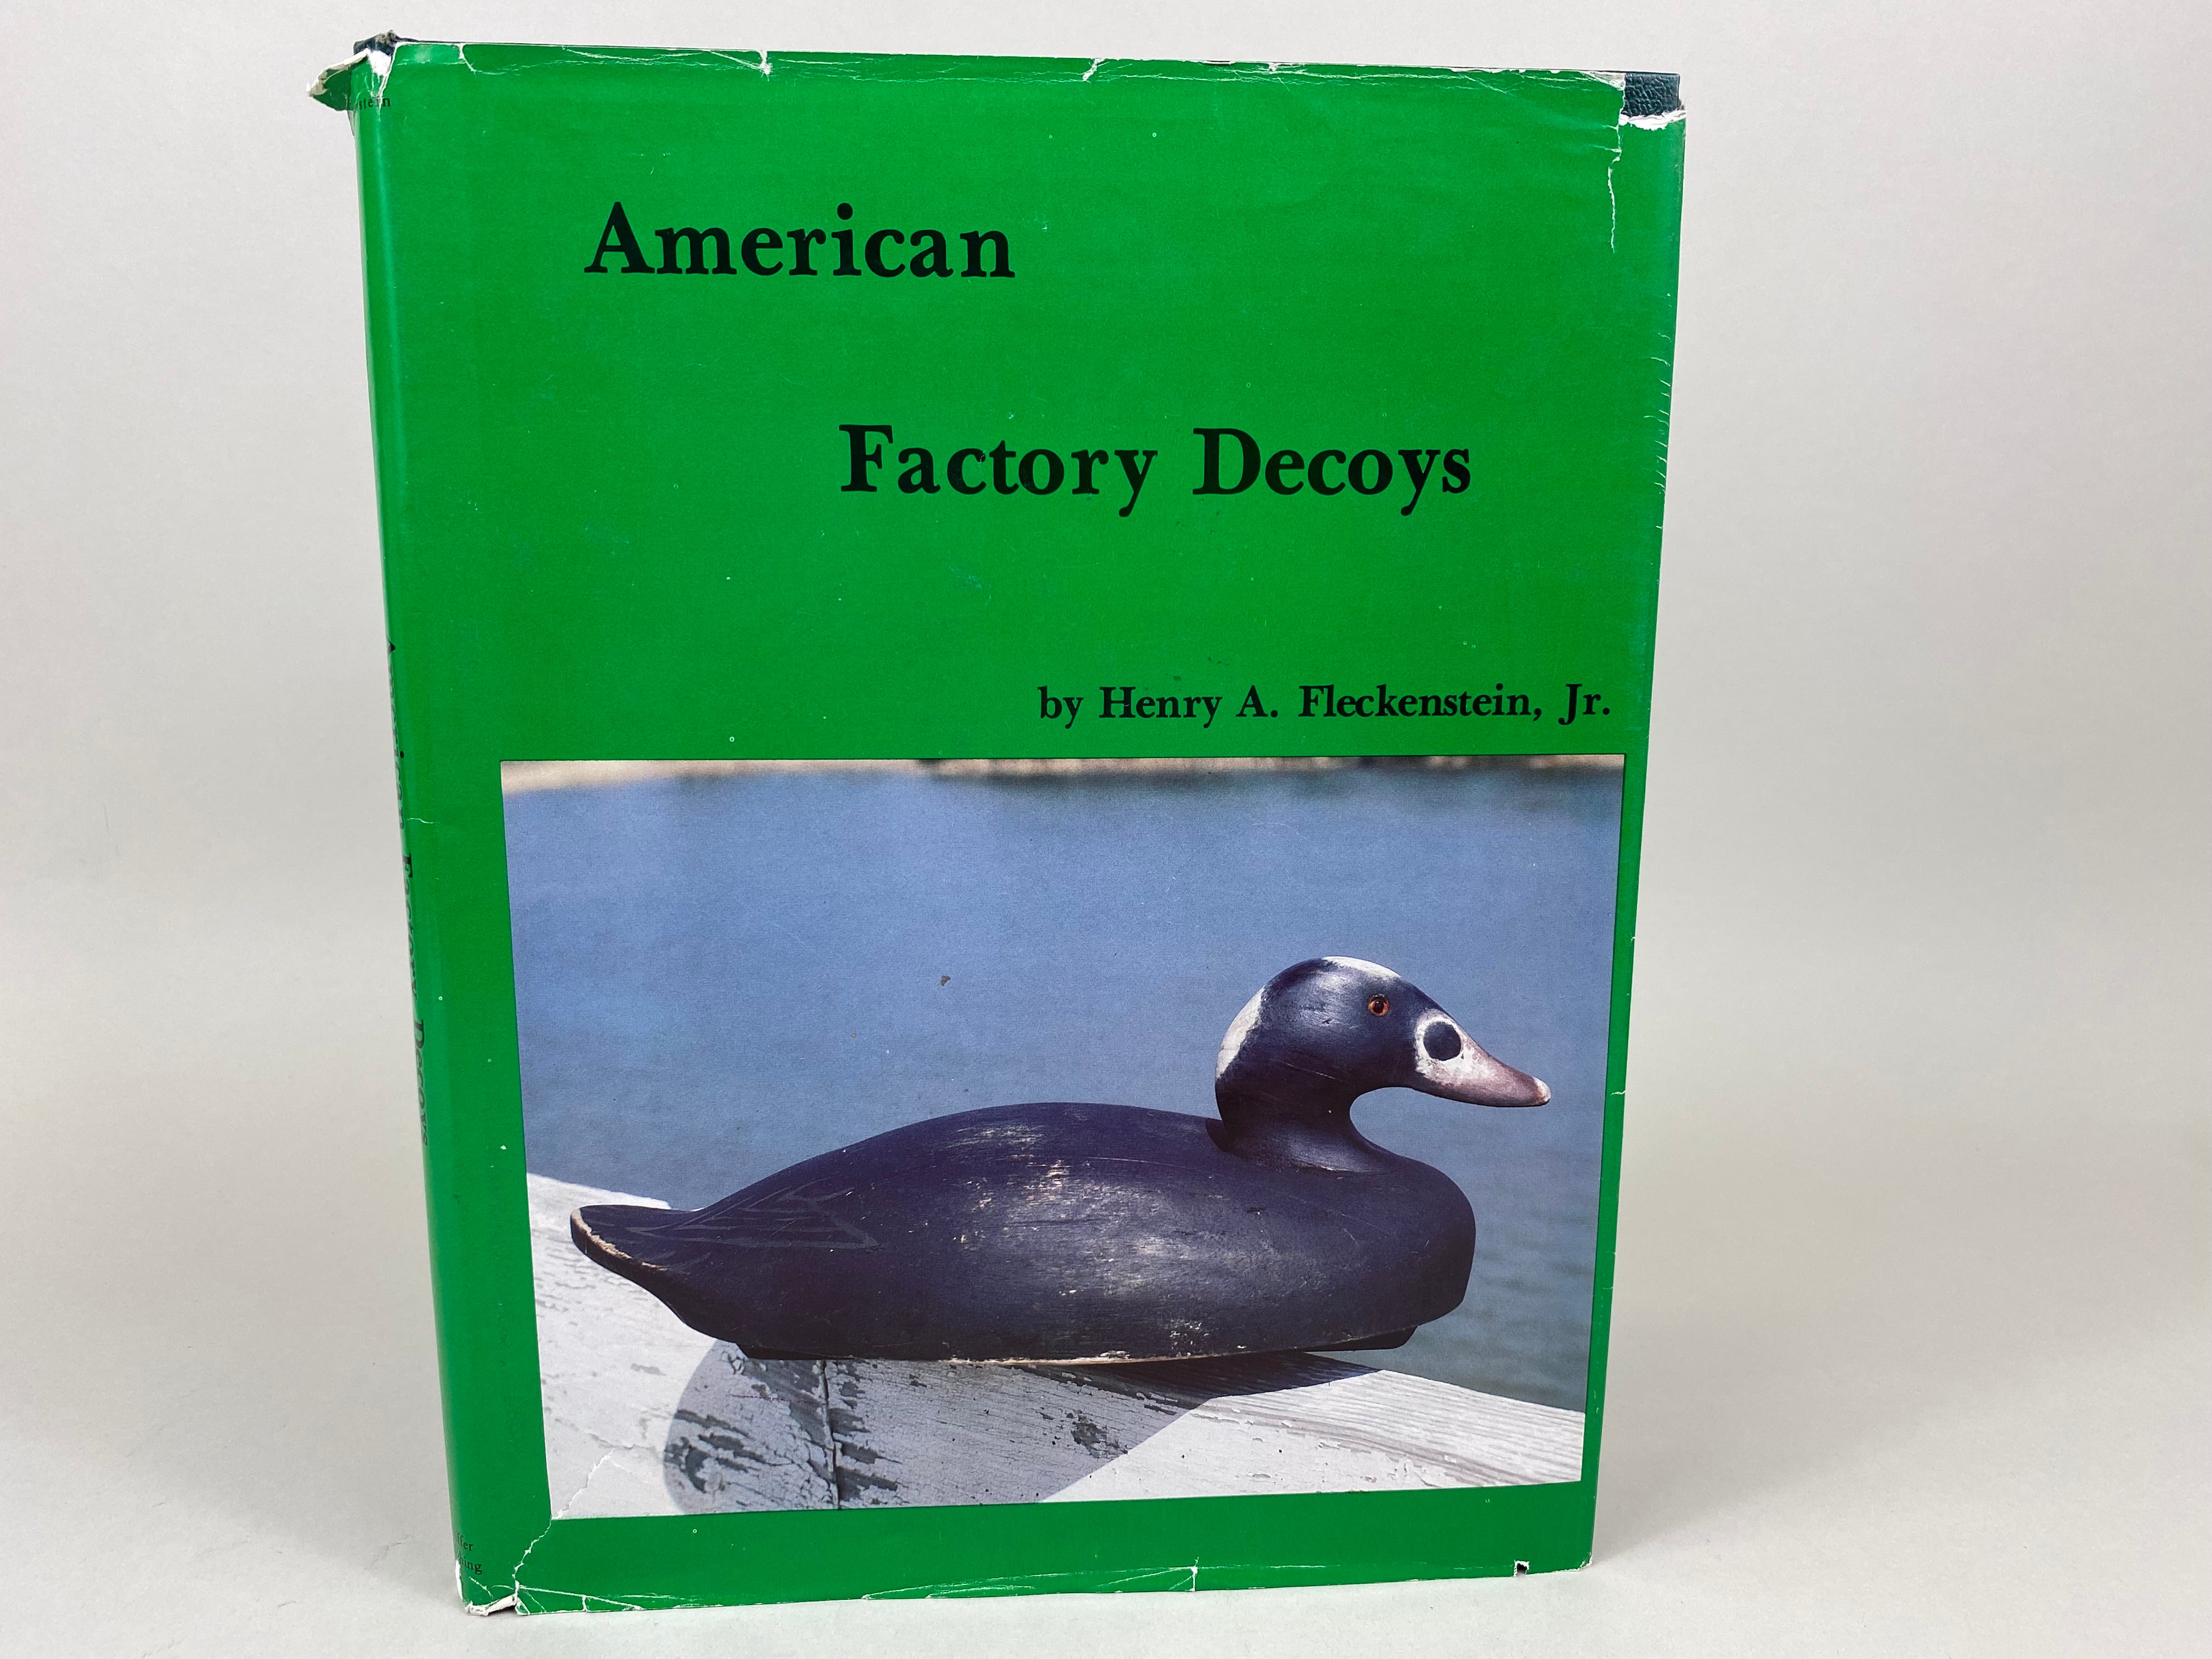 American Factory Decoys by Henry A. Fleckenstein, Jr.